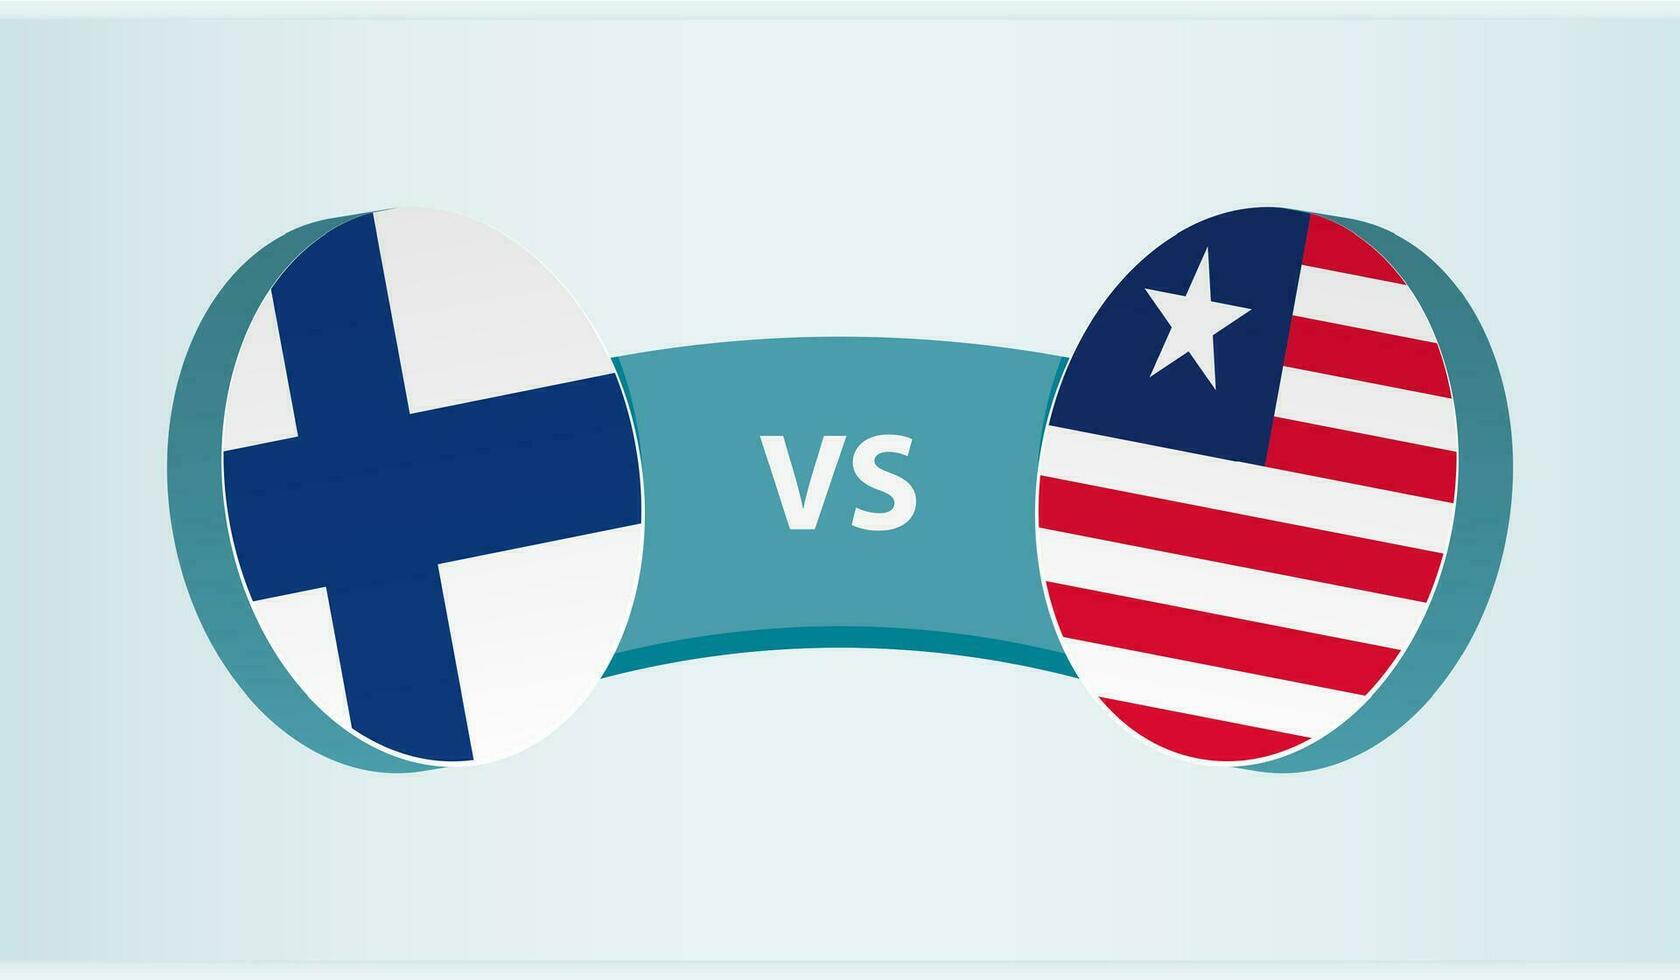 finland mot liberia, team sporter konkurrens begrepp. vektor